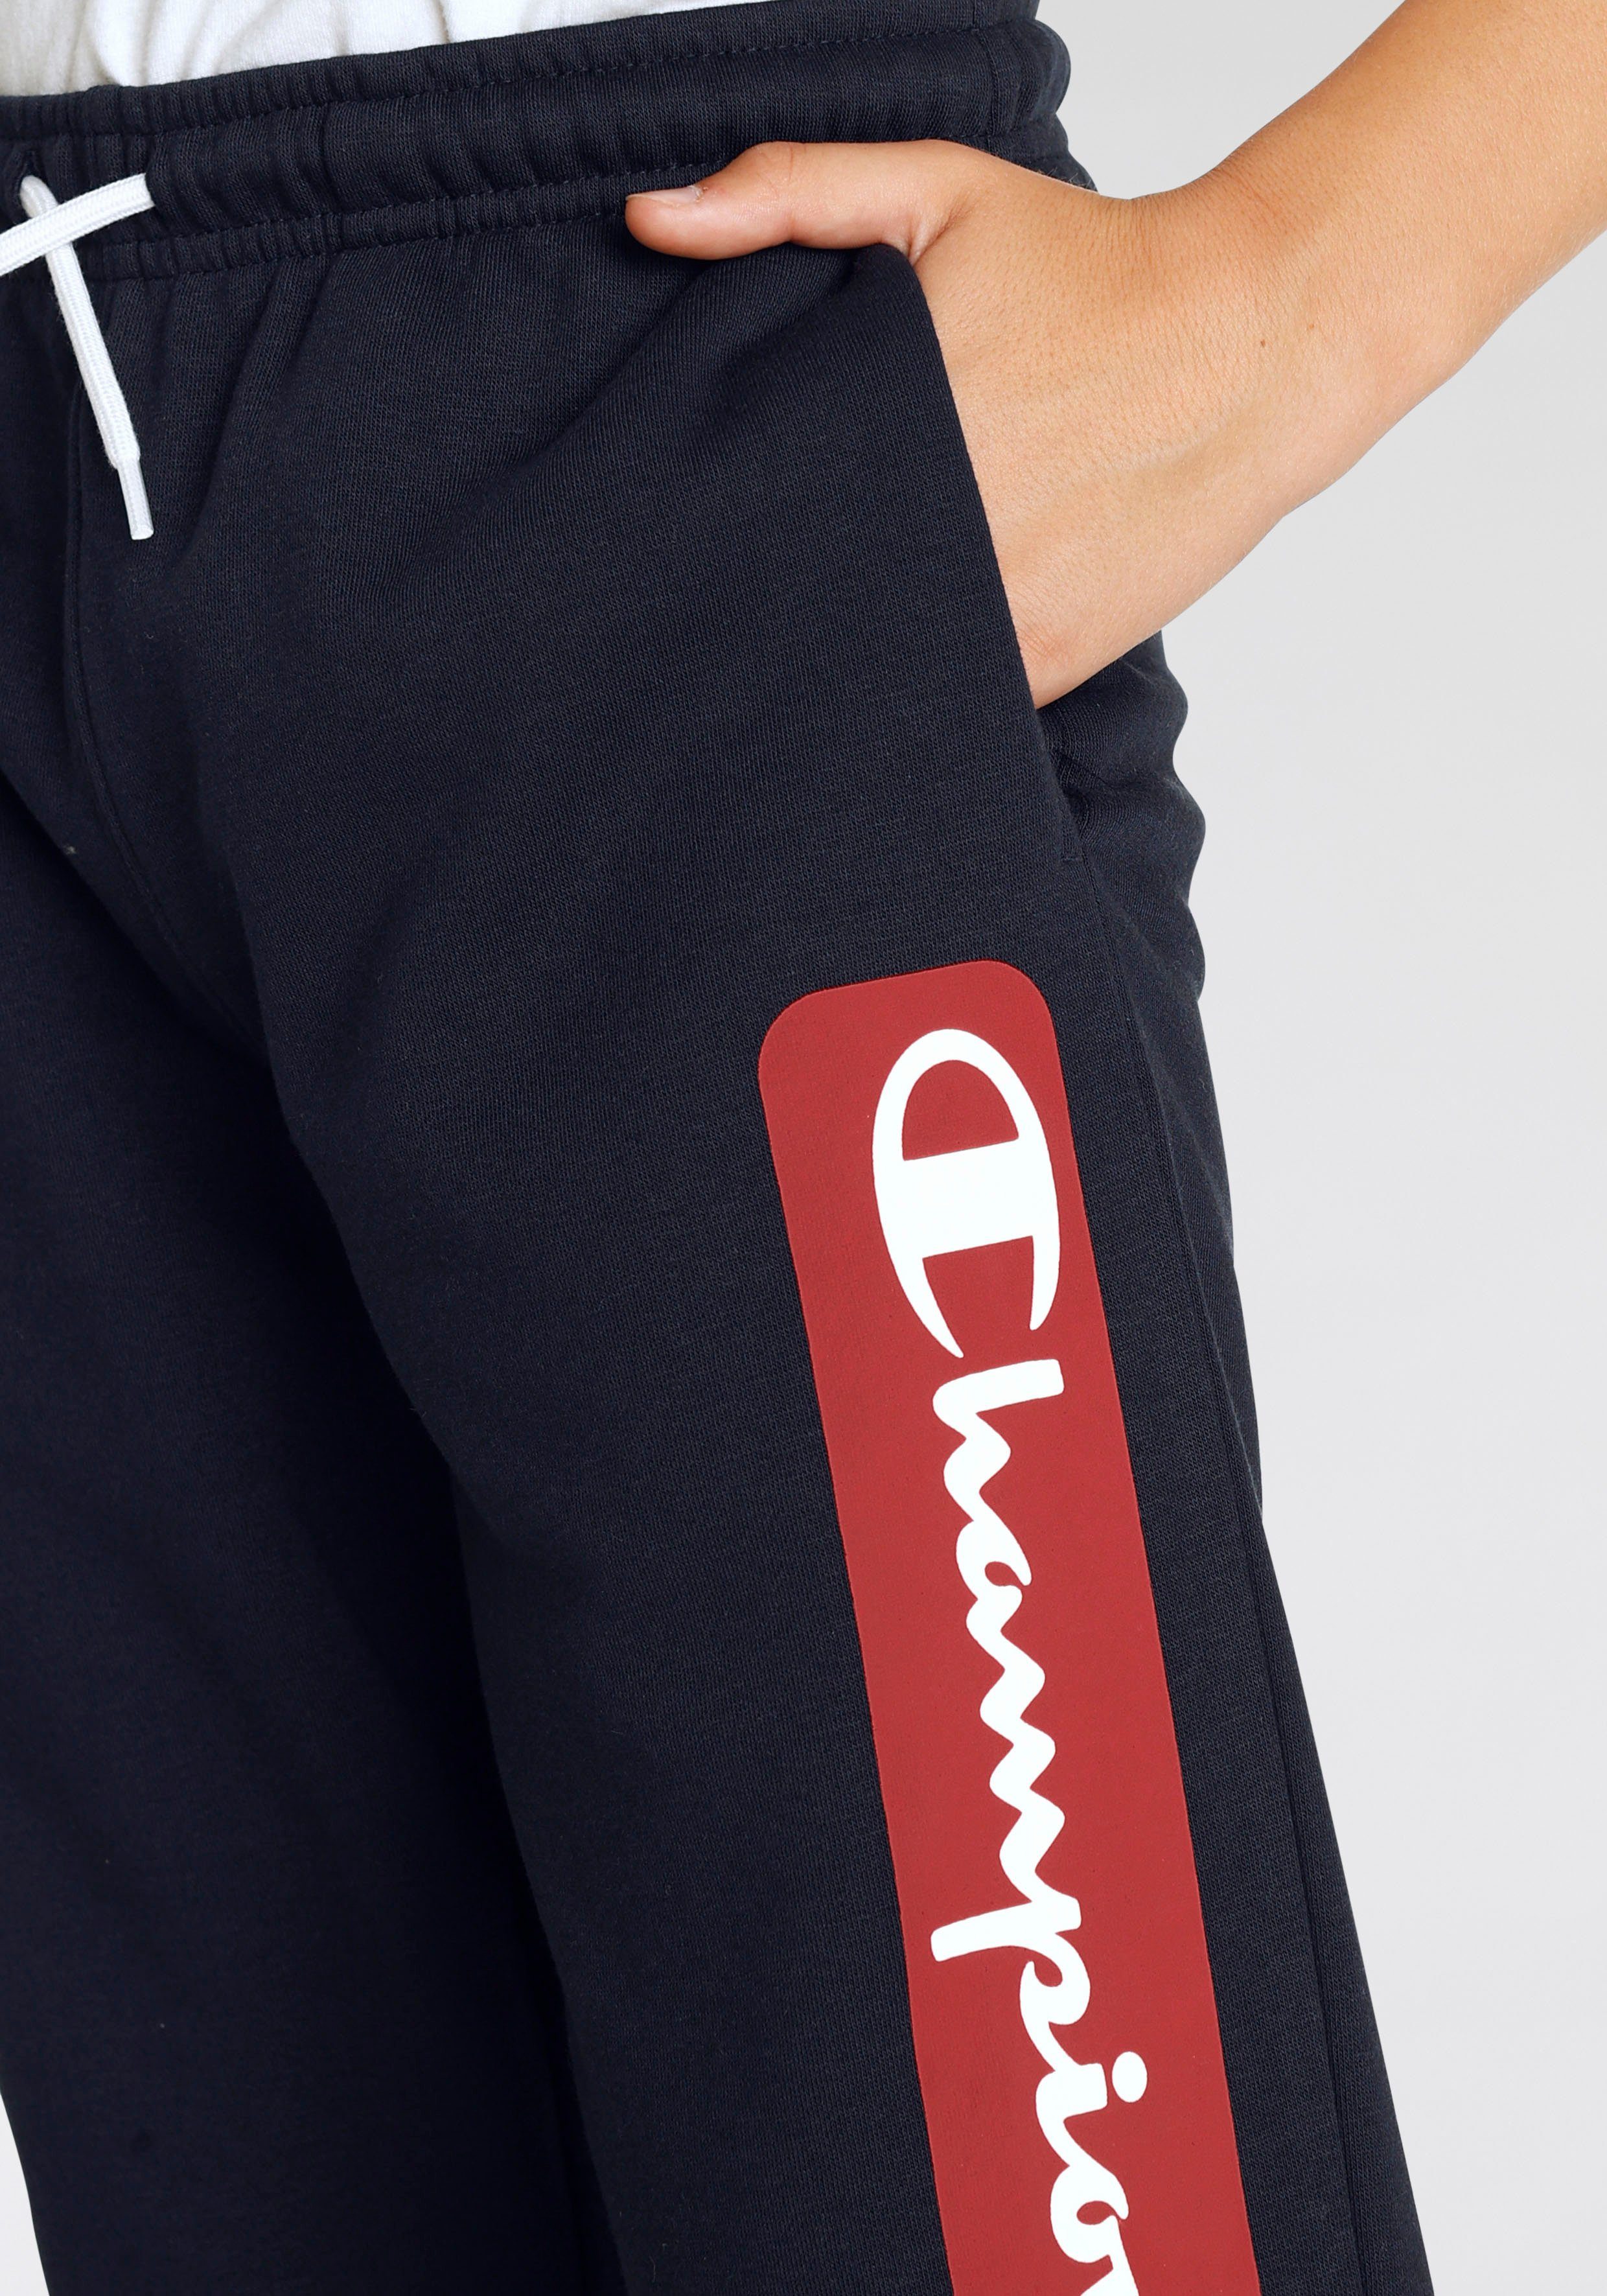 Pants Kinder Jogginghose - Shop Cuff für Champion marine Elastic Graphic